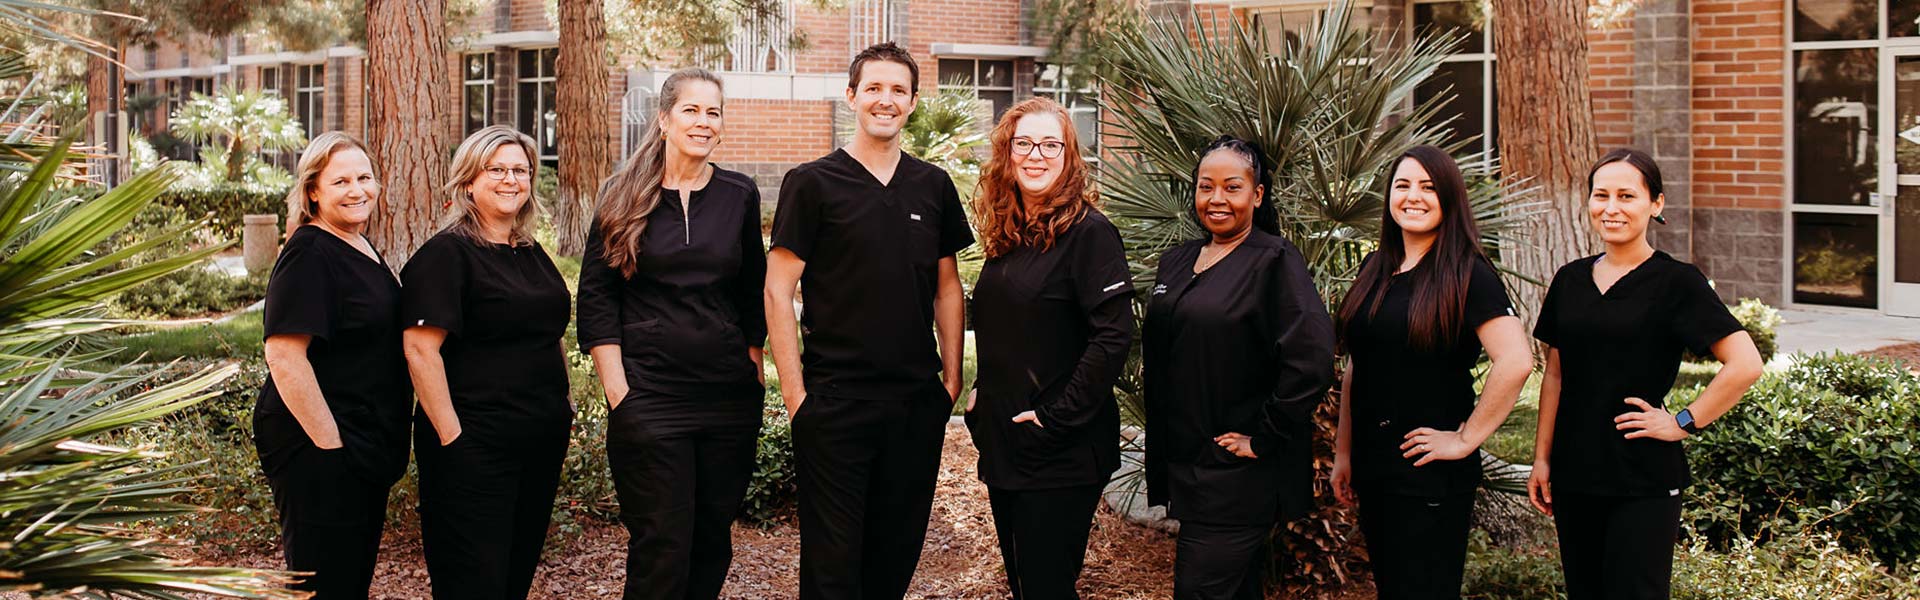 Meet the Team Header Image - Augusta Dental